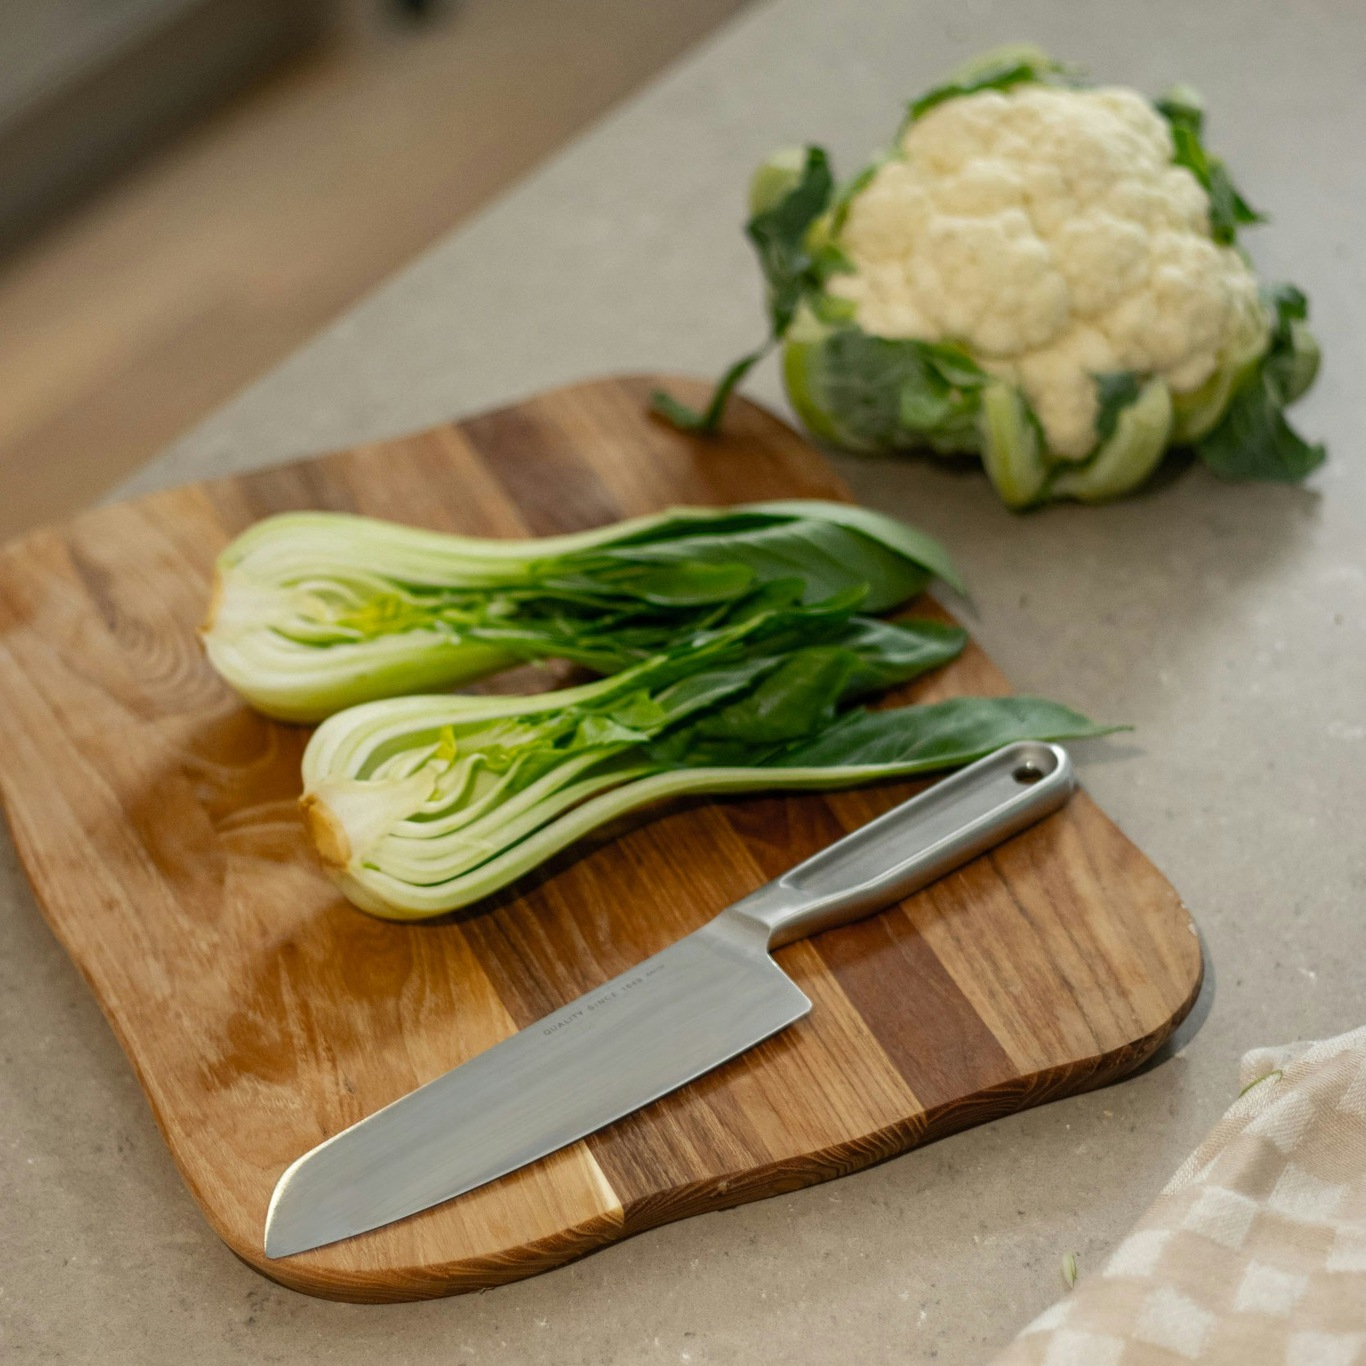 https://royaldesign.com/image/2/fiskars-all-steel-chef-knife-135-cm-1?w=800&quality=80